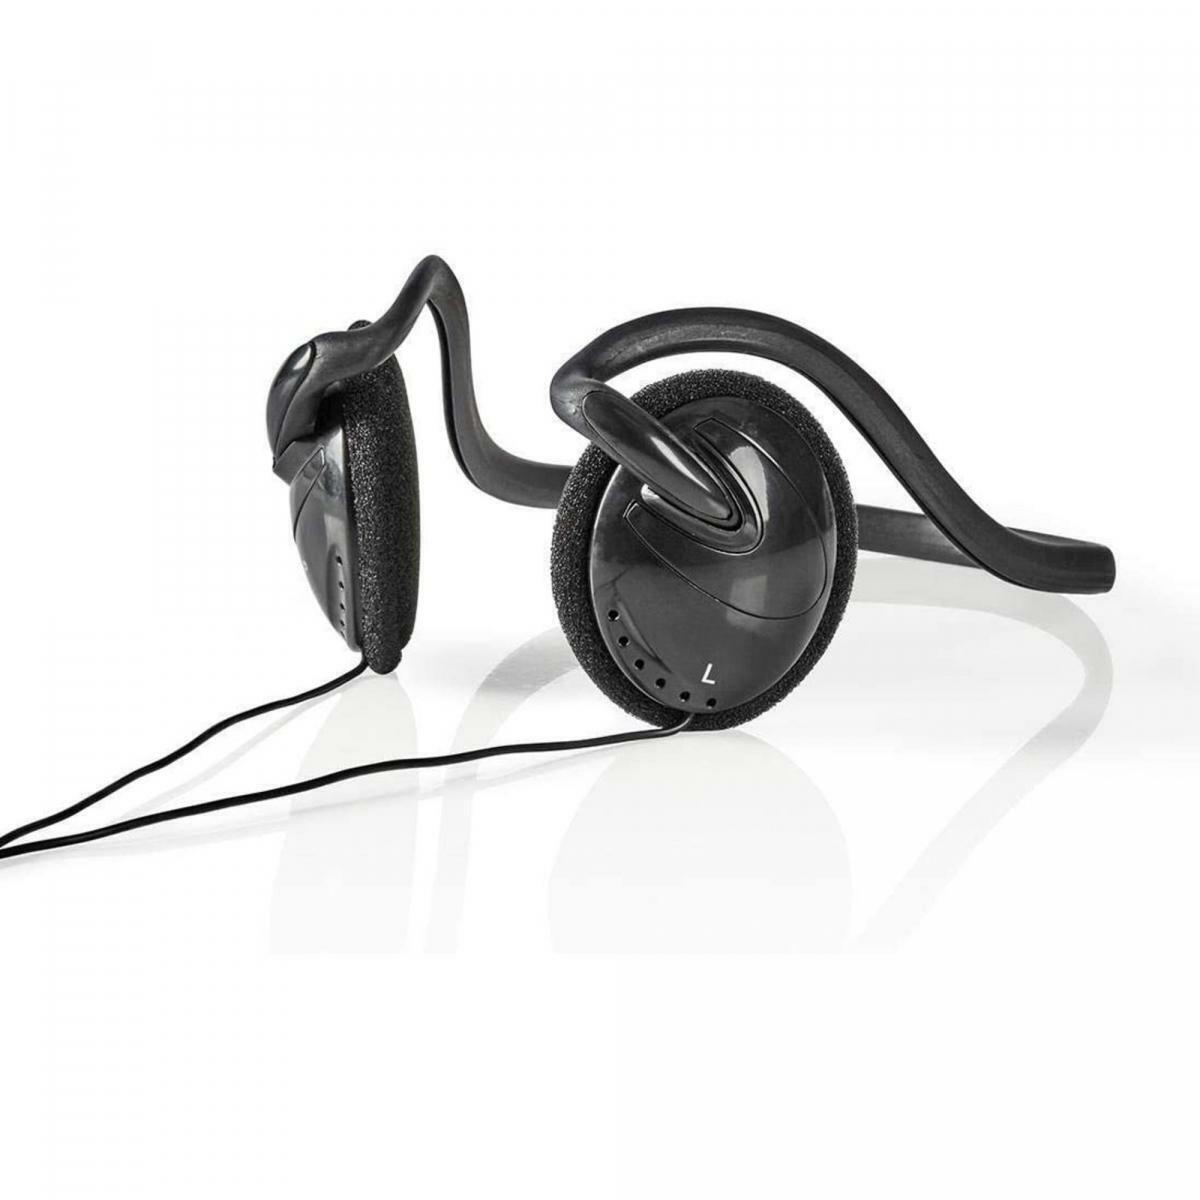 Sport Kopfhörer Nackenbügel mit Kabel für Smartphone Handy Sony Xperia 5 ii 1 ii